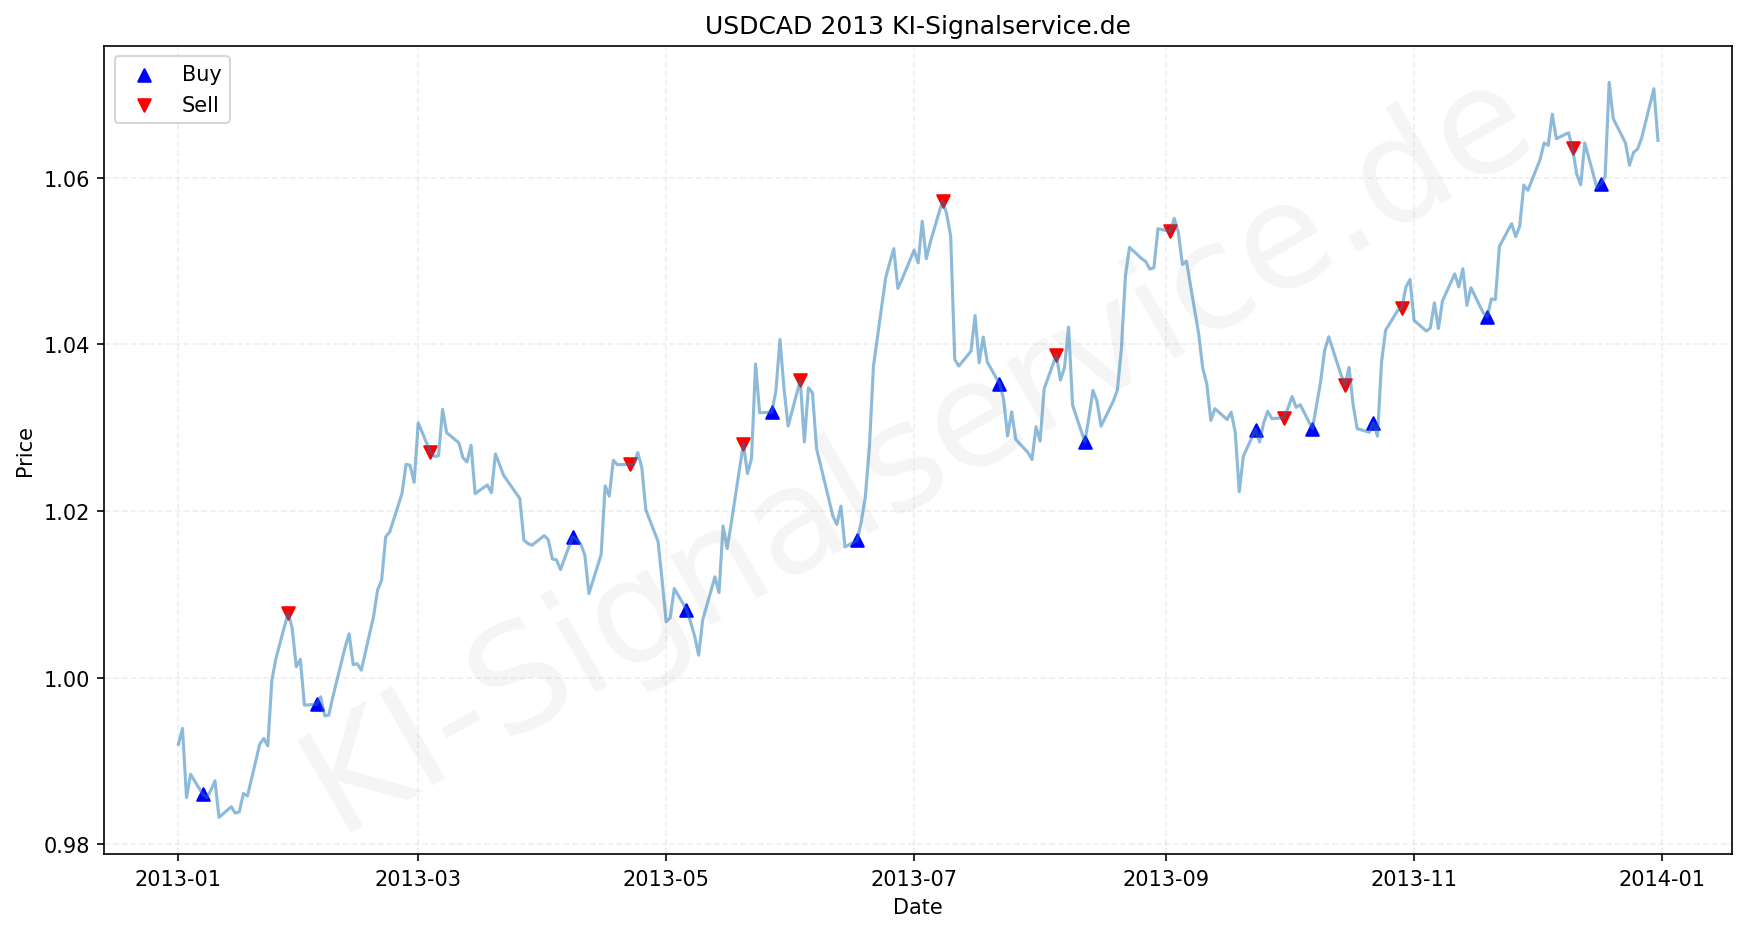 USDCAD Chart - KI Tradingsignale 2013